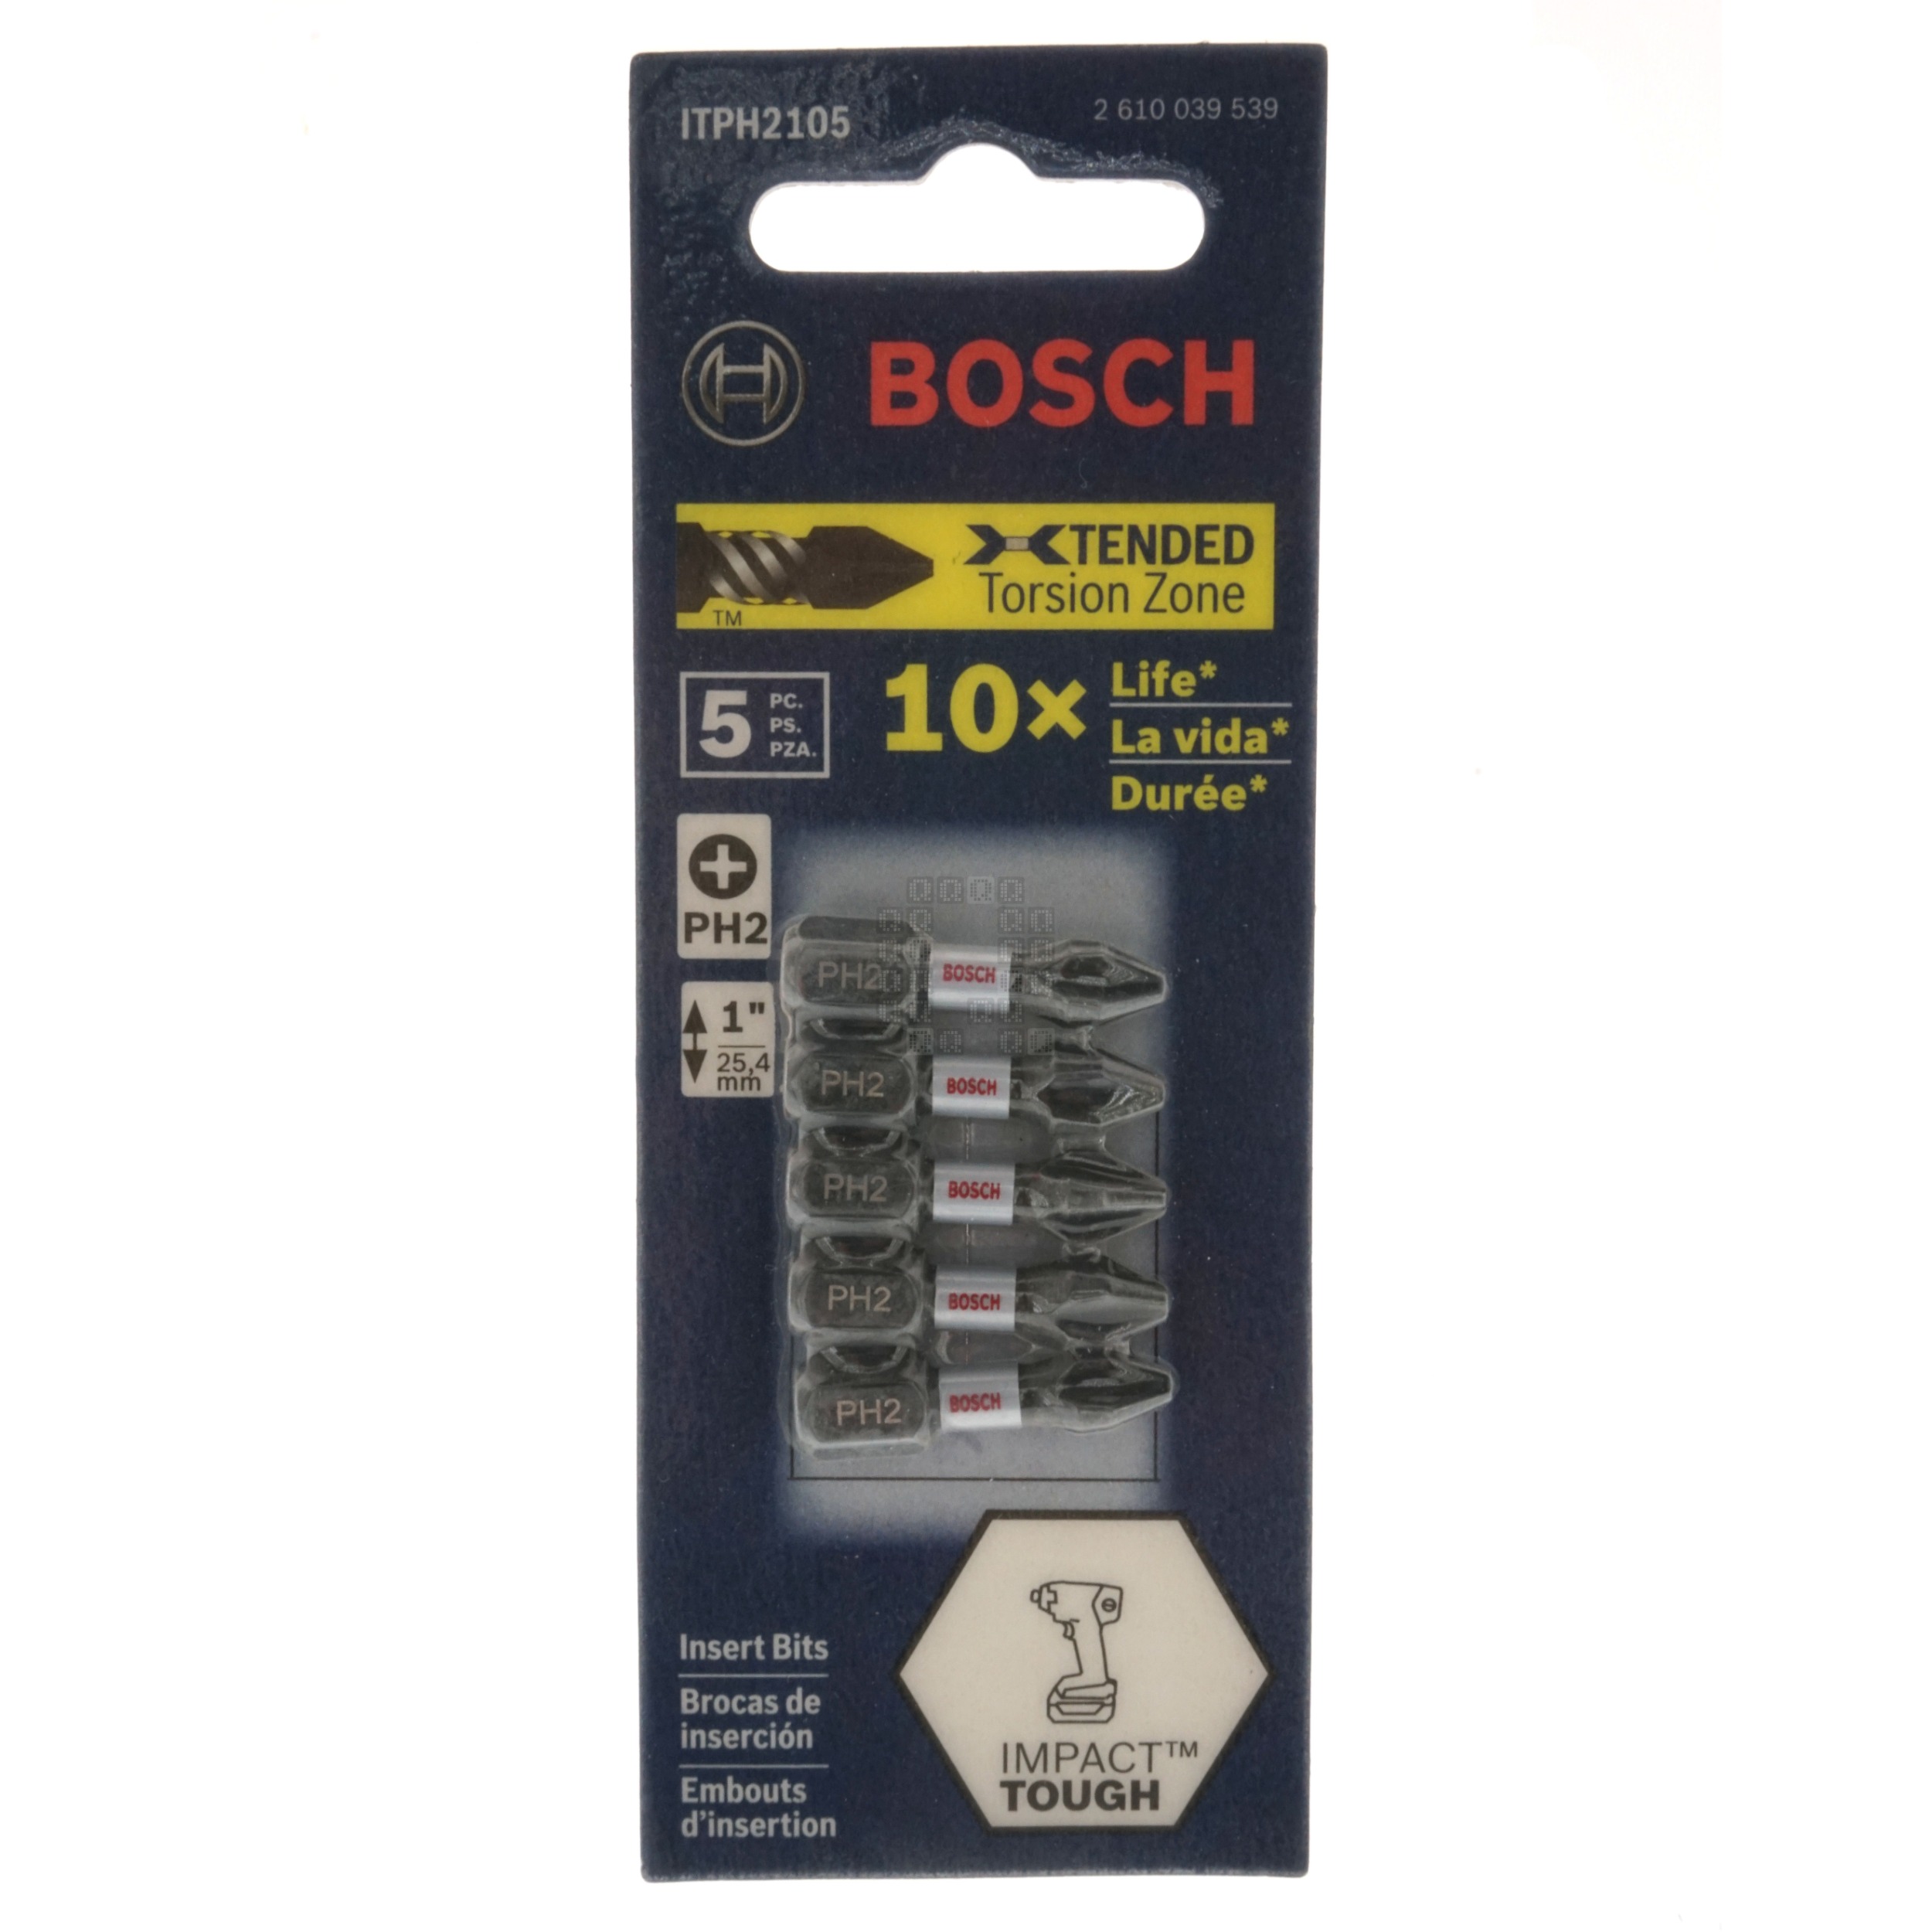 Bosch ITPH2105 Impact Tough PH2 #2 Phillips Insert Bits, 1" Length, 5-Pack, 2610039539